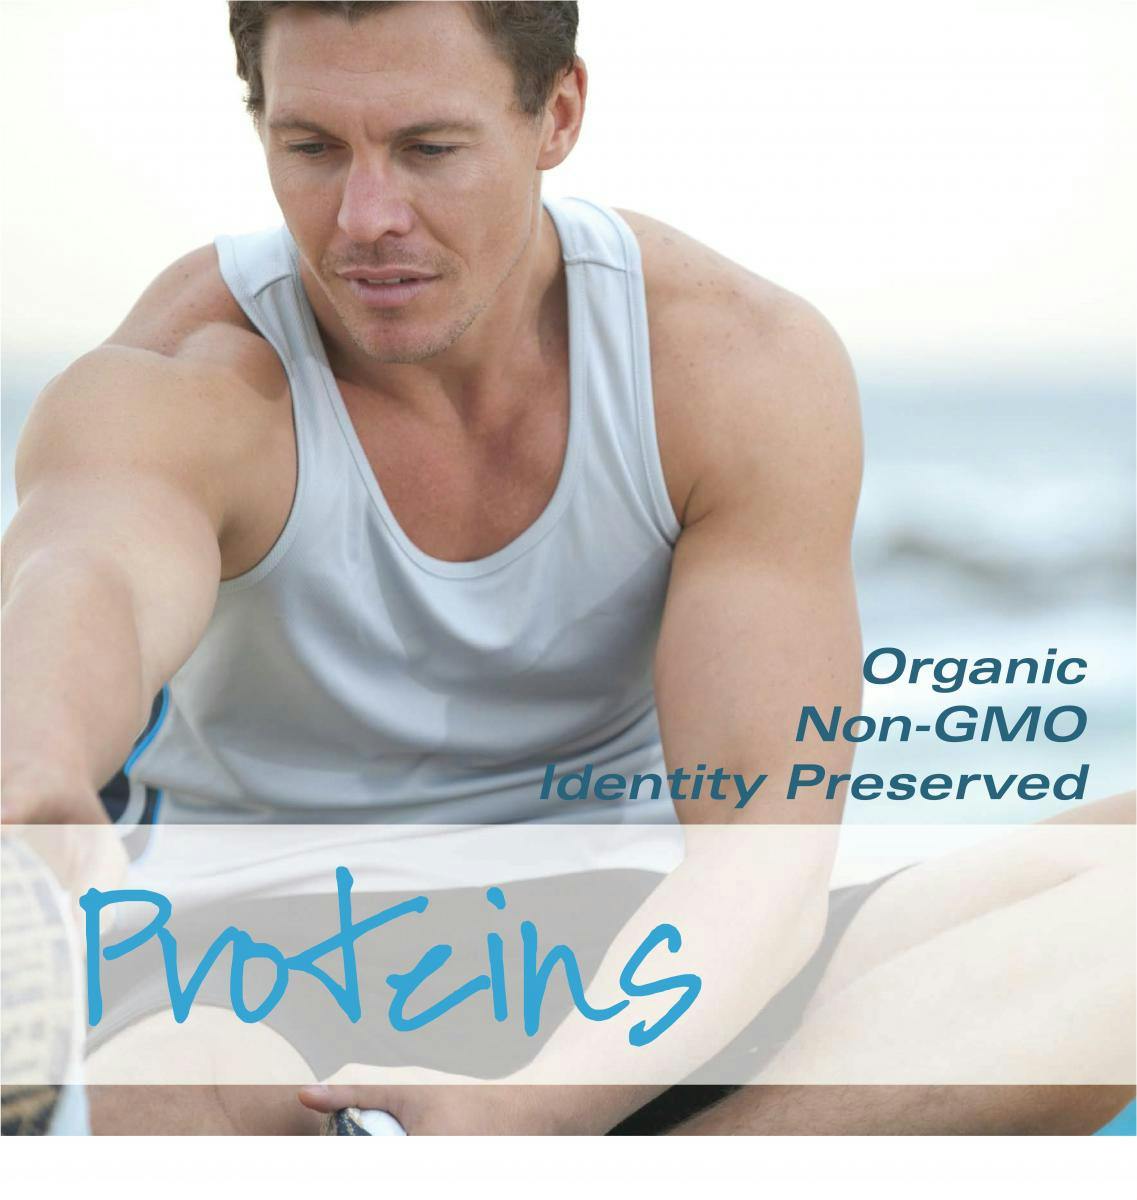 Expo West Sneak Peak: Non-GMO Certified Soy Protein